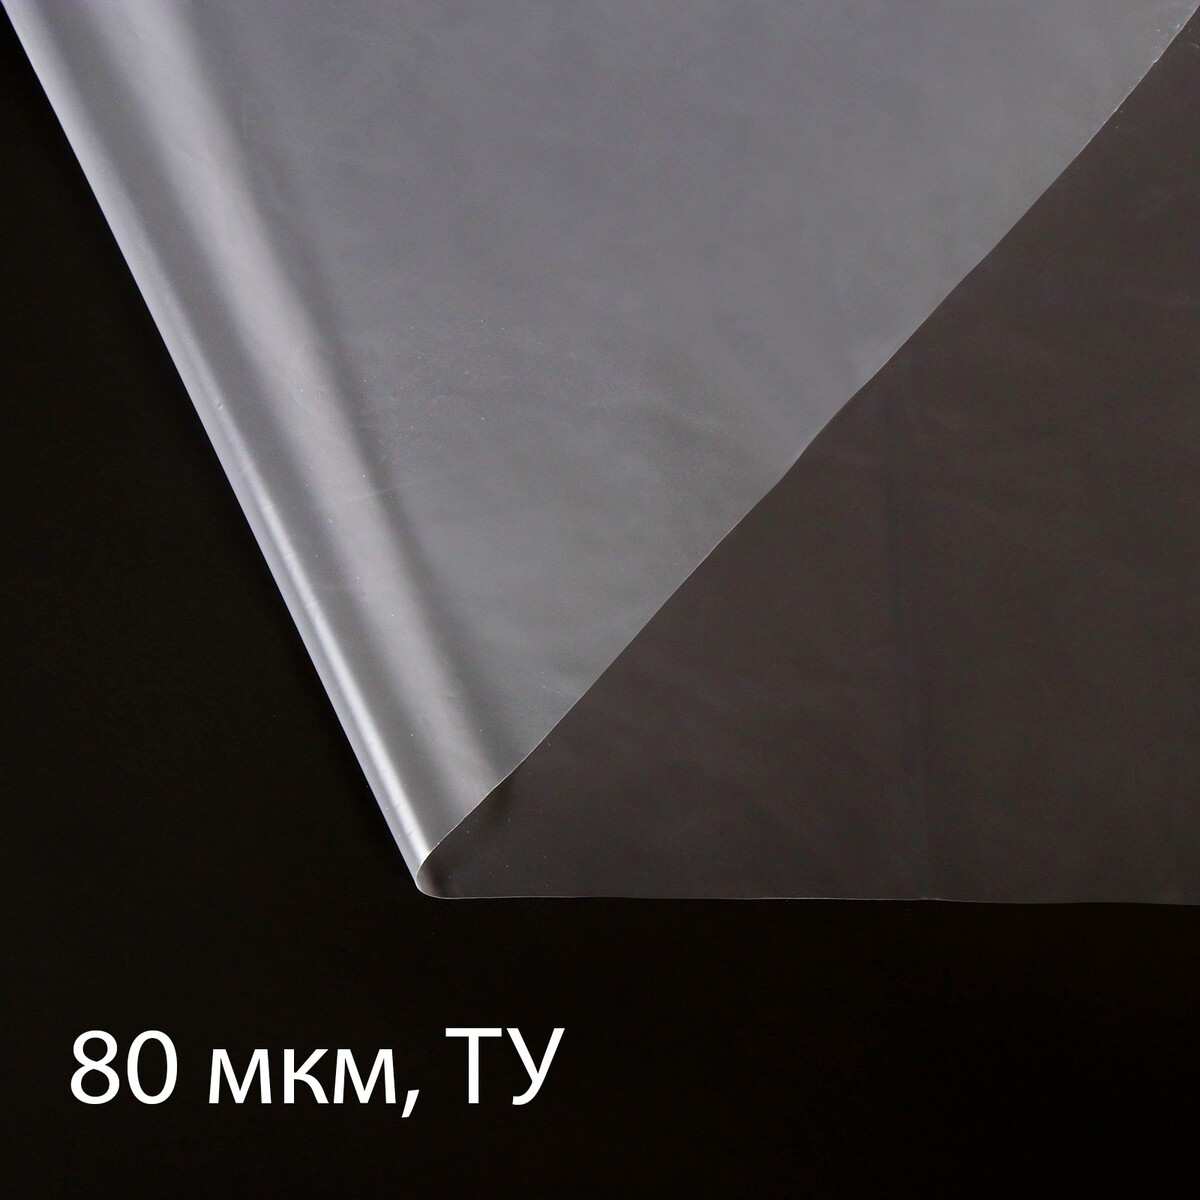 Пленка полиэтиленовая 80 мкм, прозрачная, длина 5 м, ширина 3 м, рукав (1.5 × 2 м), эконом 50% пленка полиэтиленовая толщина 200 мкм прозрачная 5 × 3 м рукав 1 5 м × 2 эконом 50%